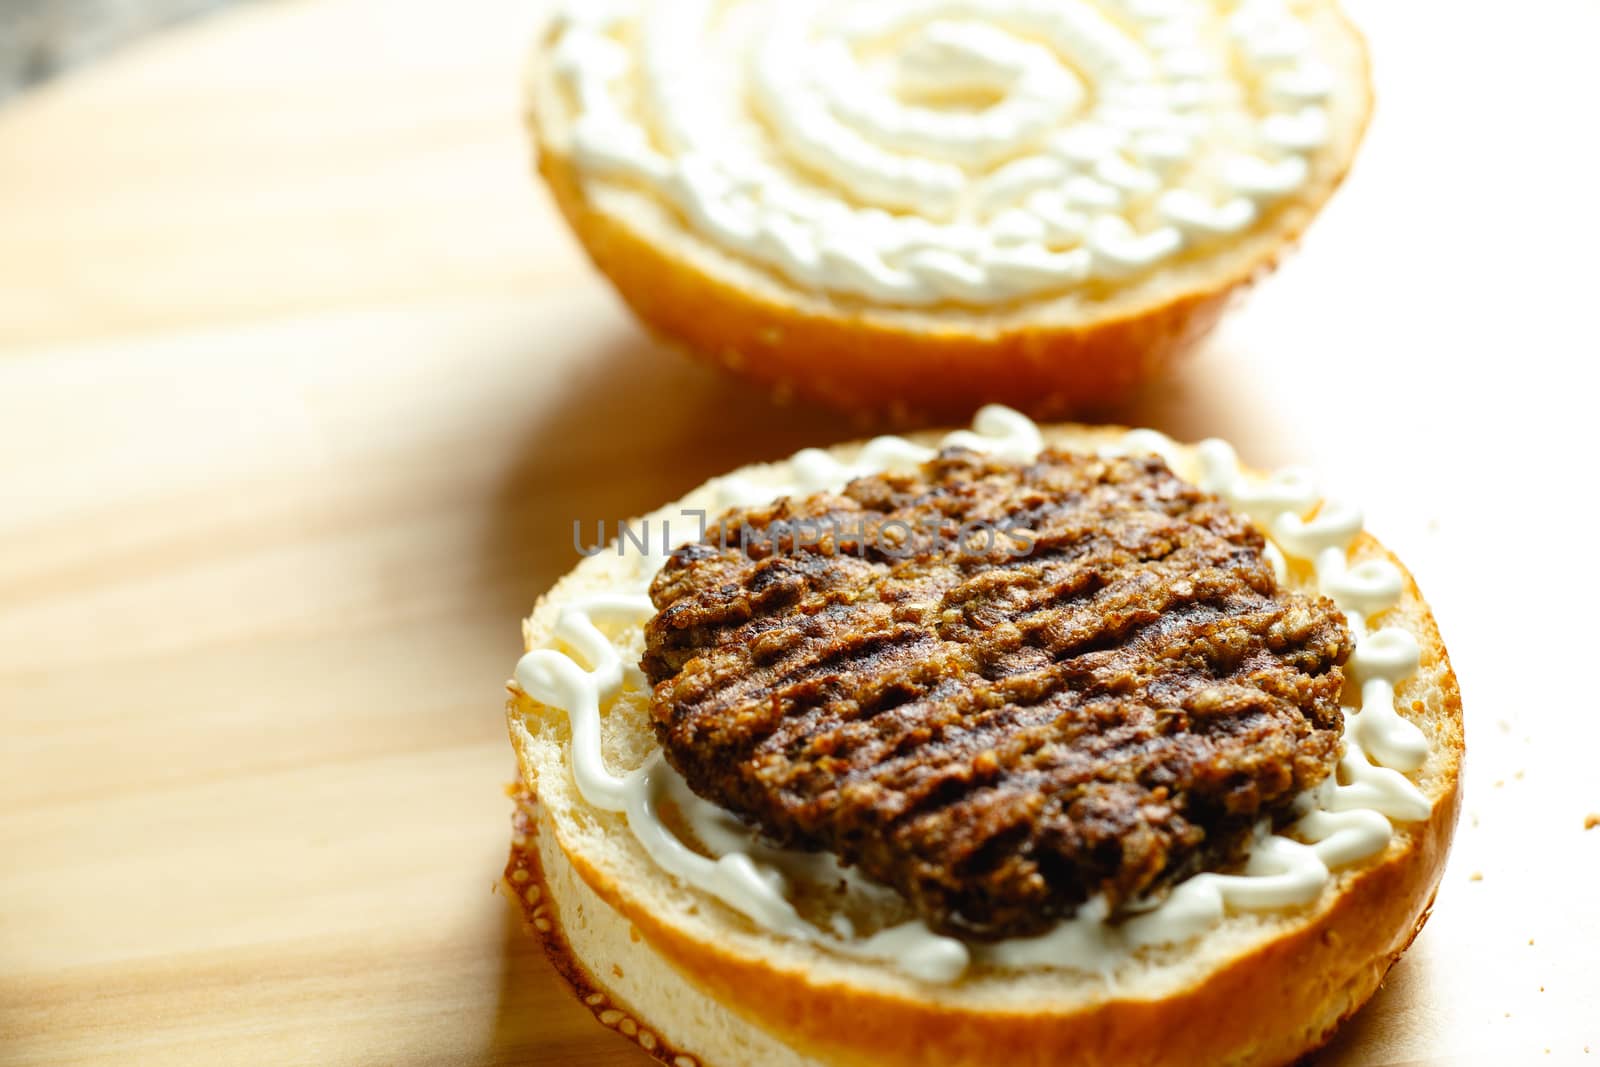 beef patty lies on a bun for a burger closeup photo